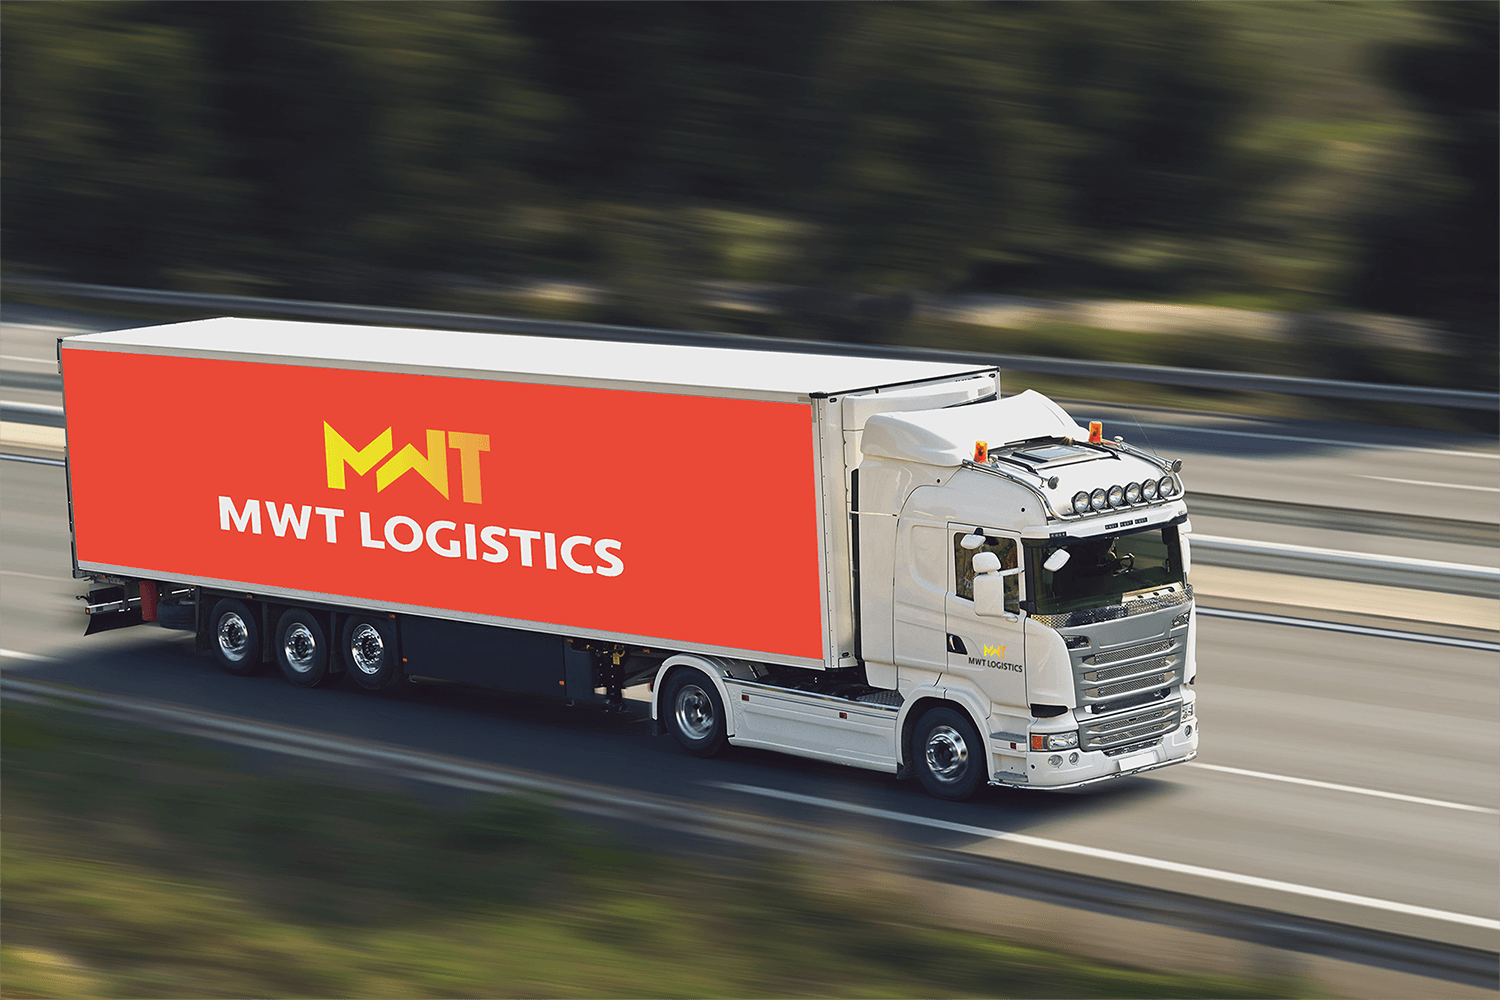 MWT Logistics gives Simple Logistic Solutions